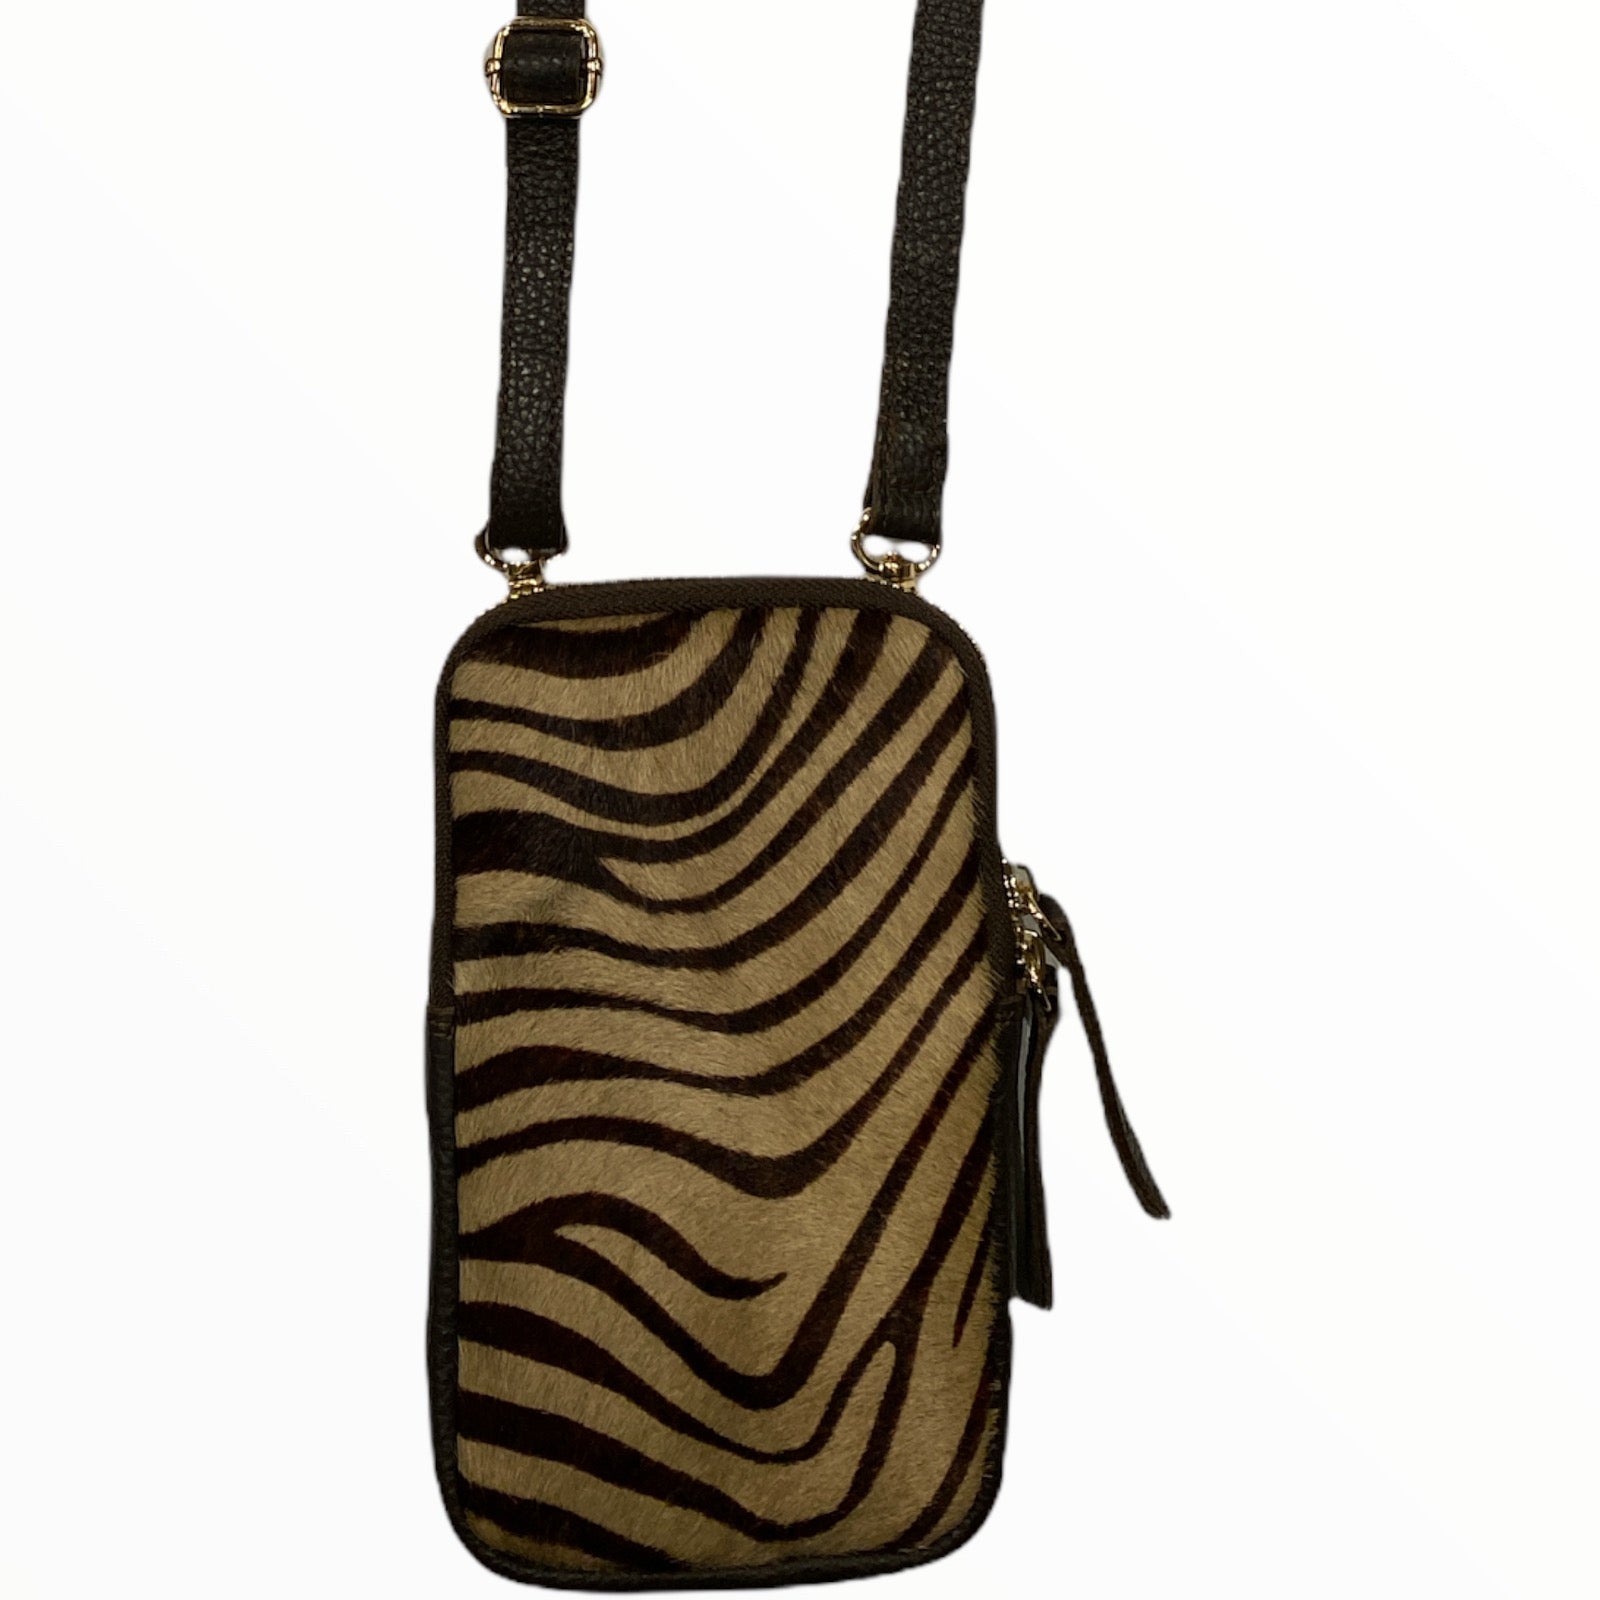 Dark brown-beige zebra-print mobile leather case